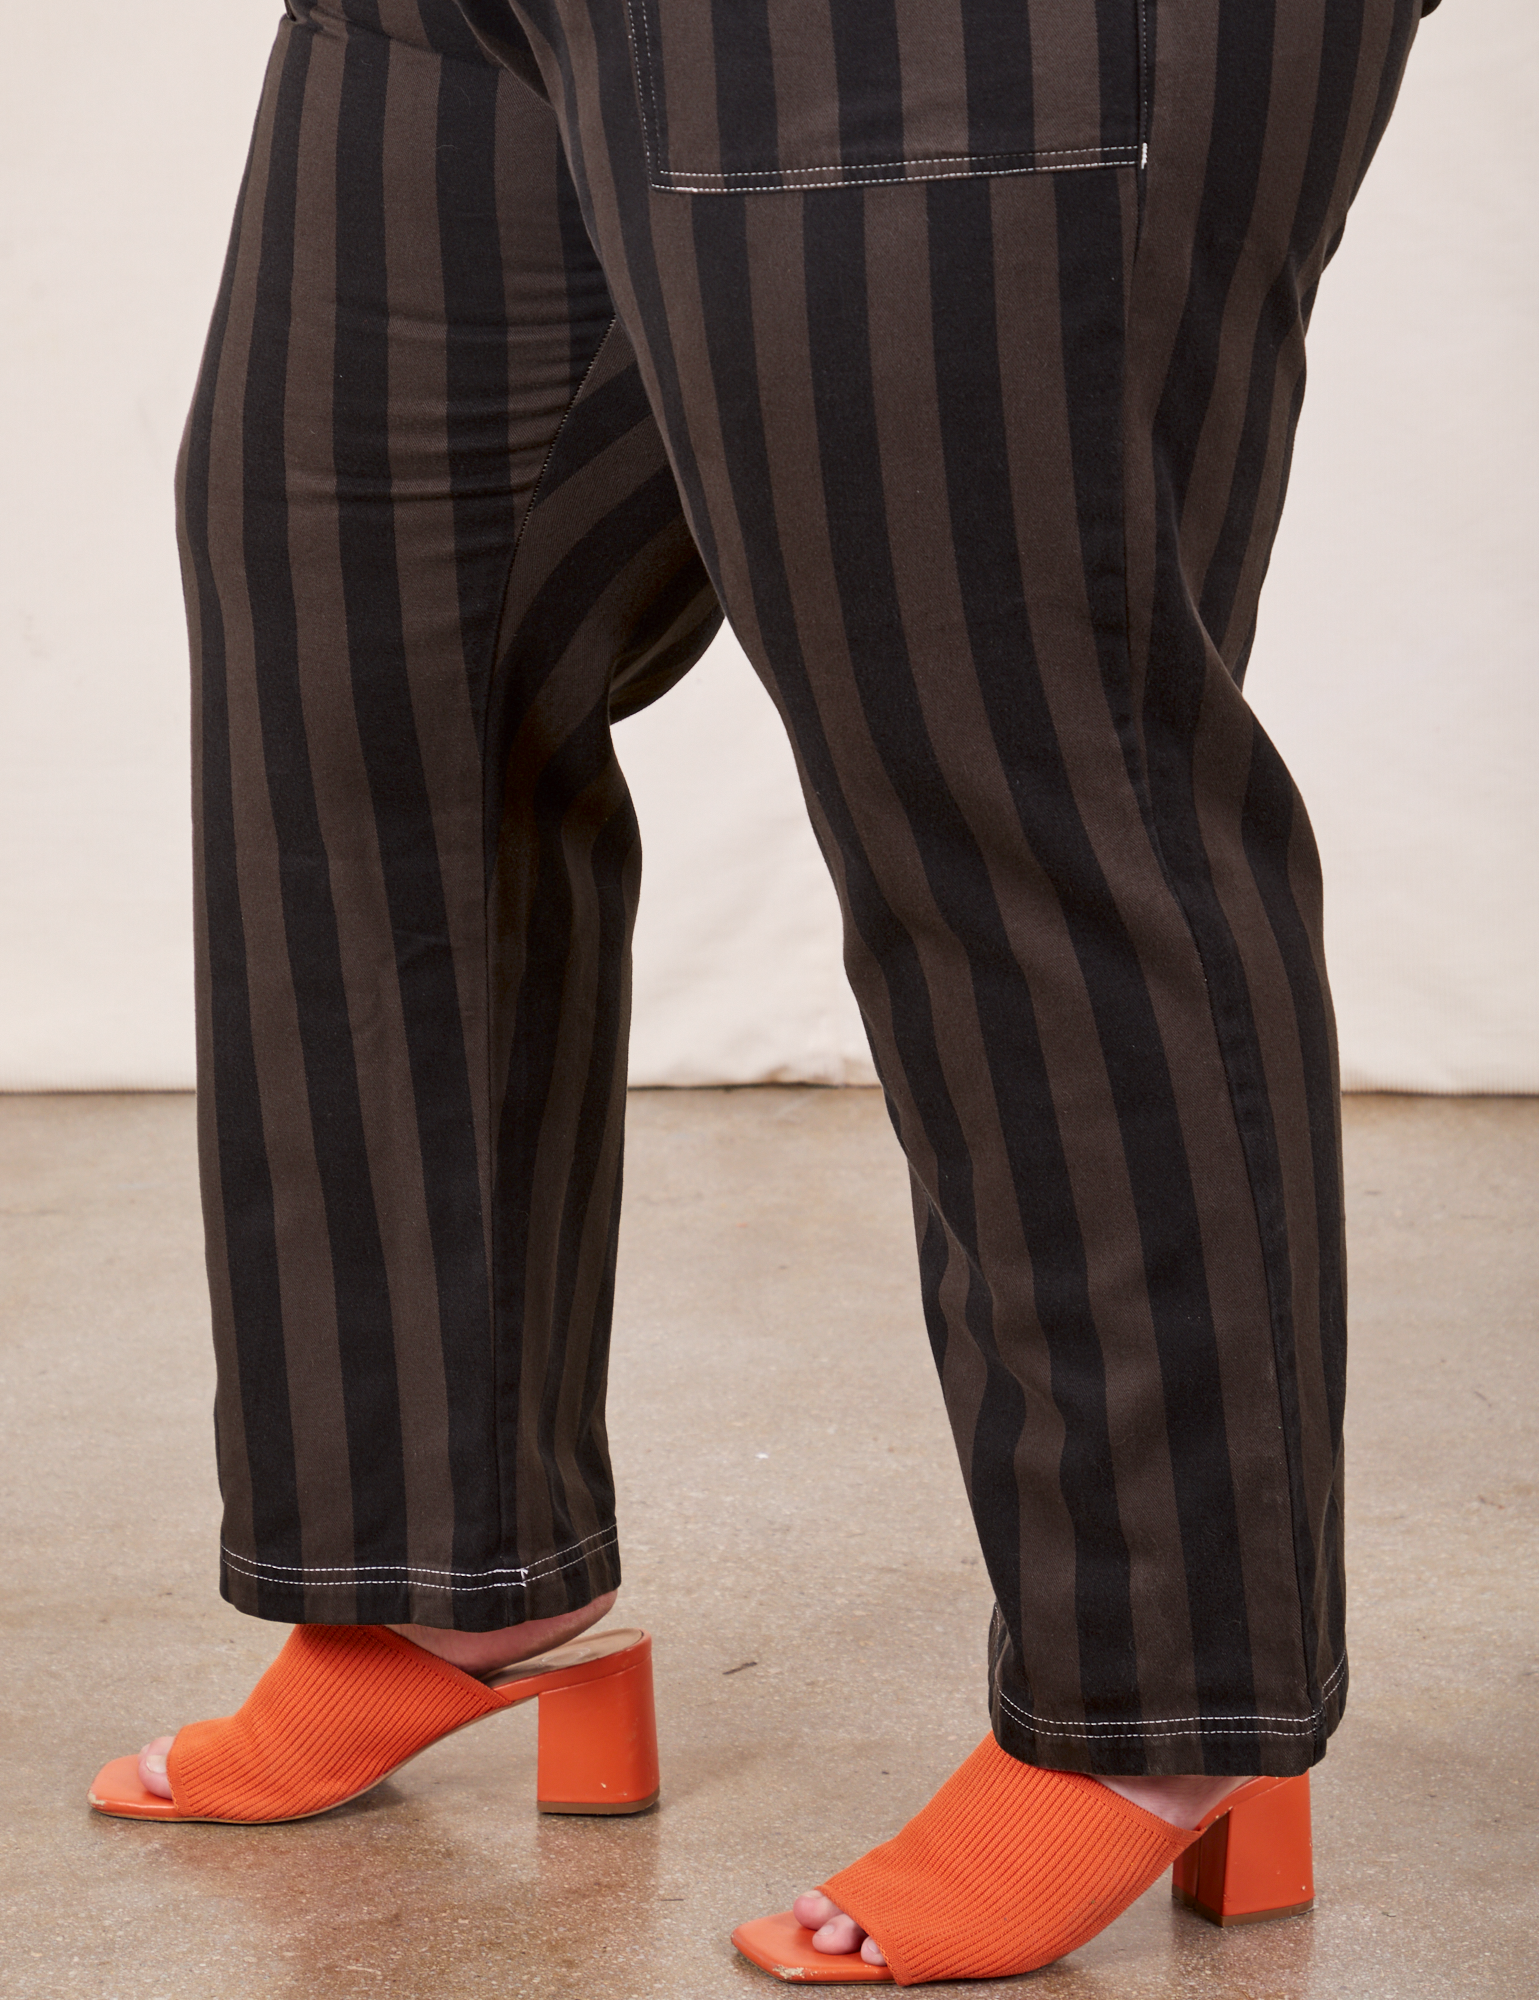 Black Striped Work Pants in Espresso pant leg side view on Marielena